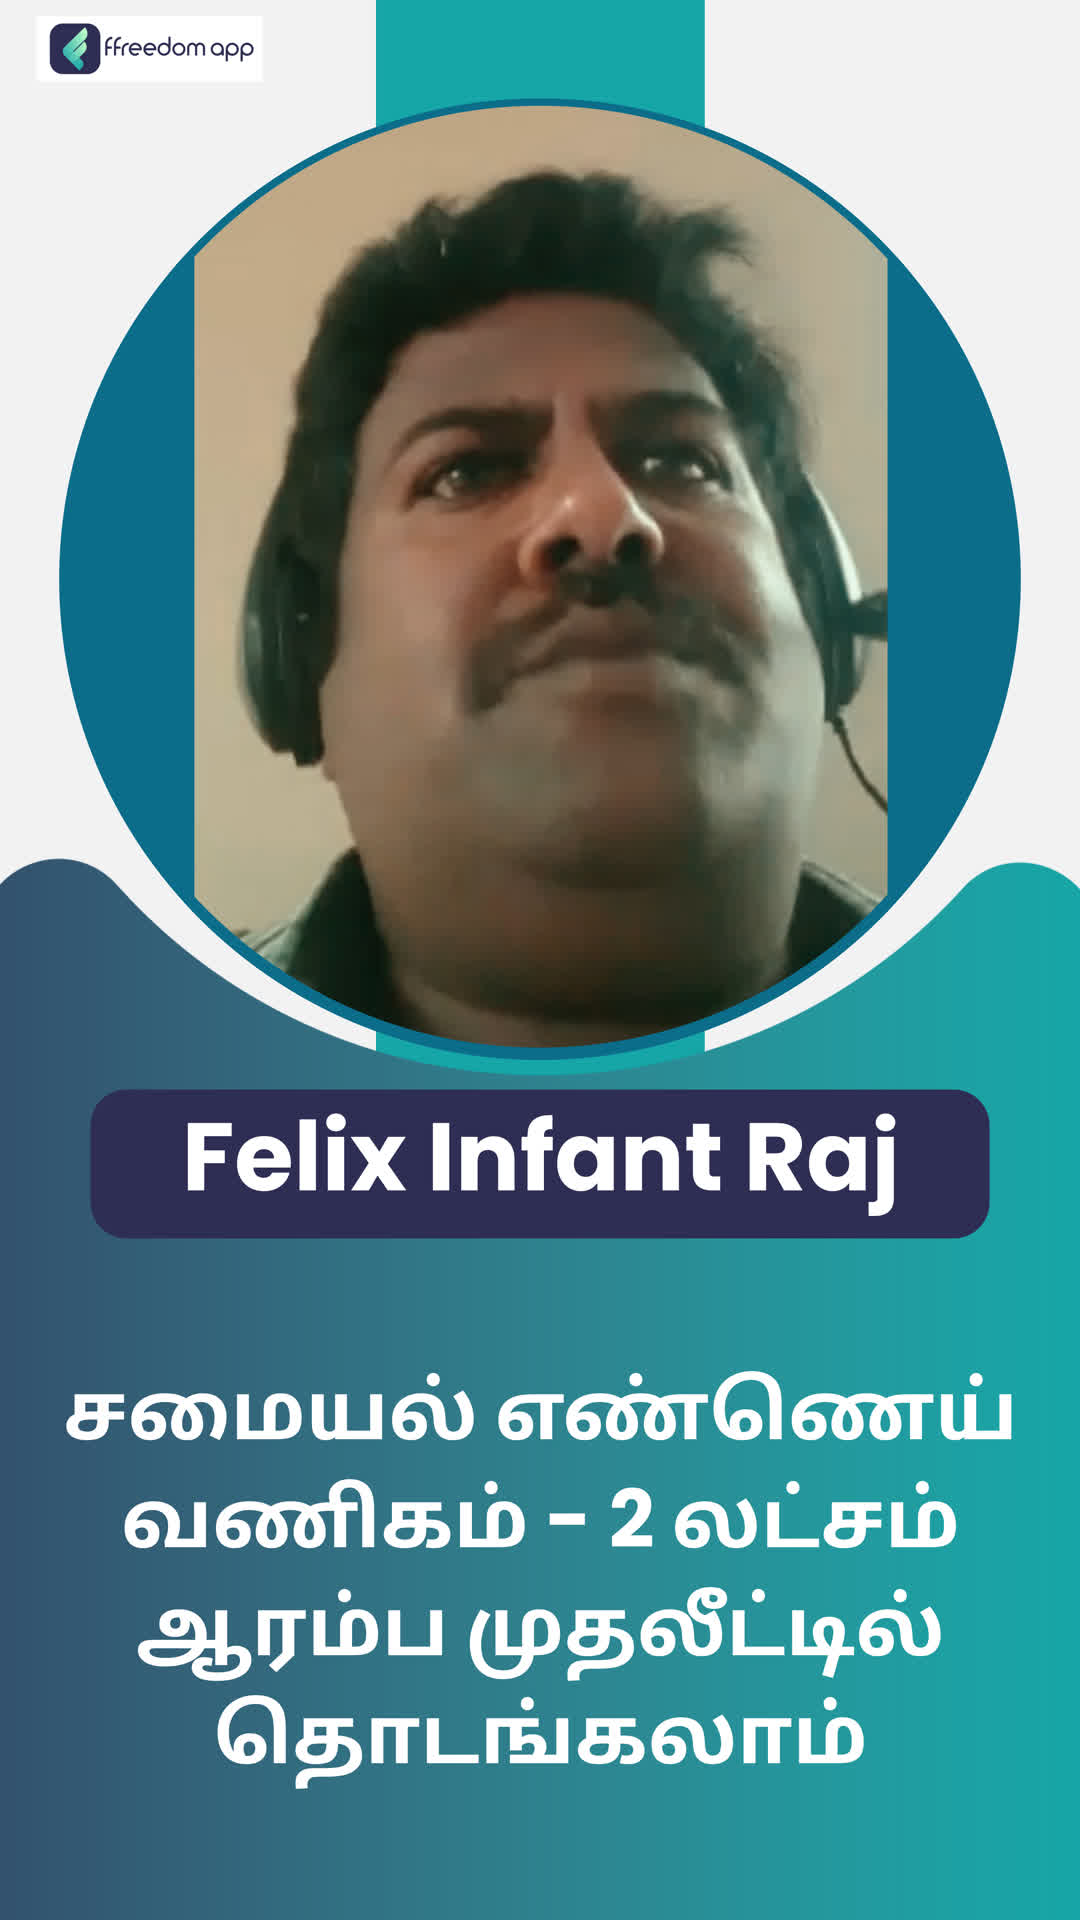 FELIX INFANT RAJ's Honest Review of ffreedom app - Dindigul ,Tamil Nadu